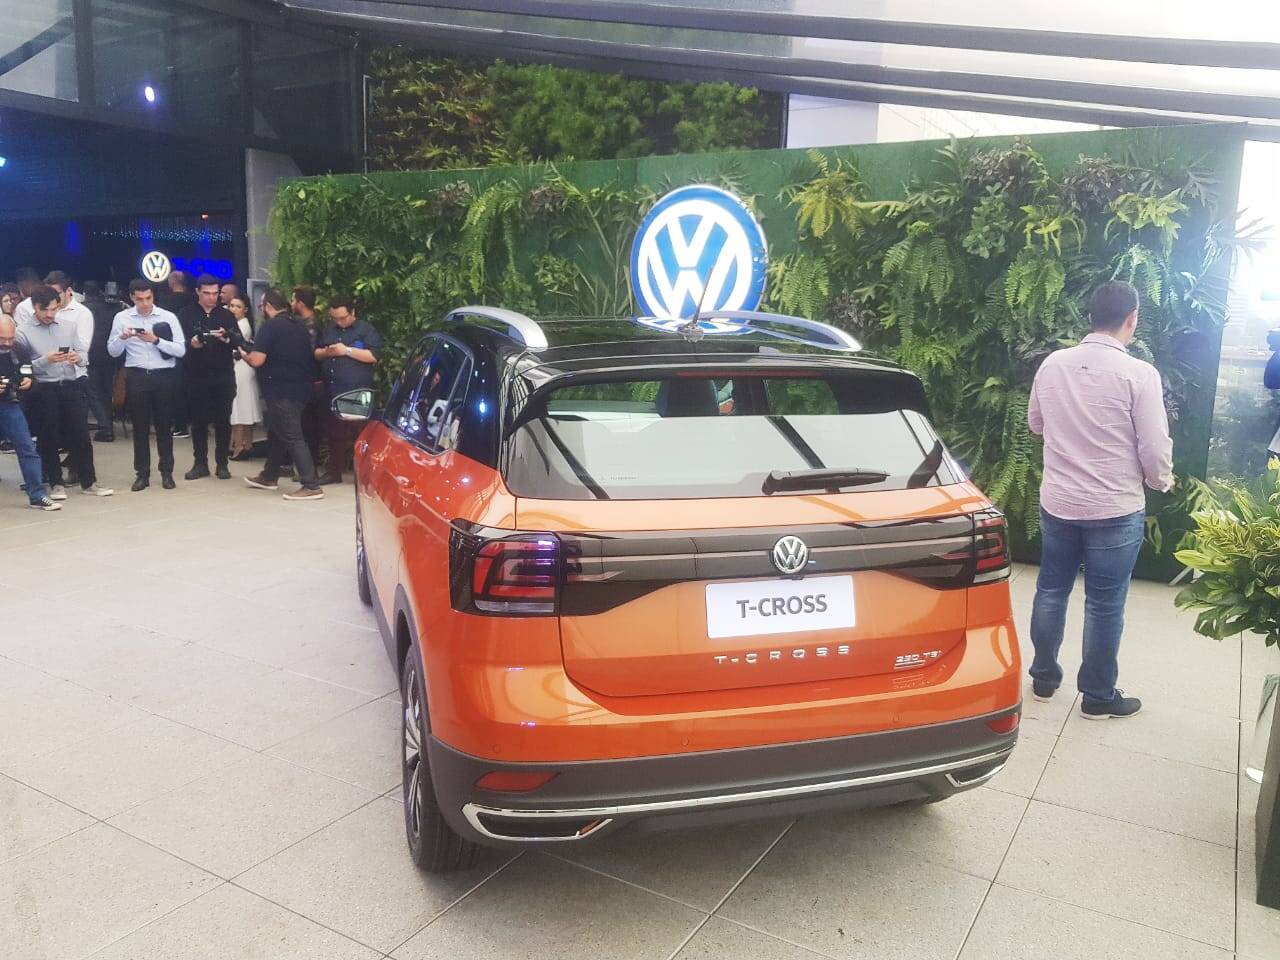 VW T-Cross 2019. Foto: Caue Lira/iG